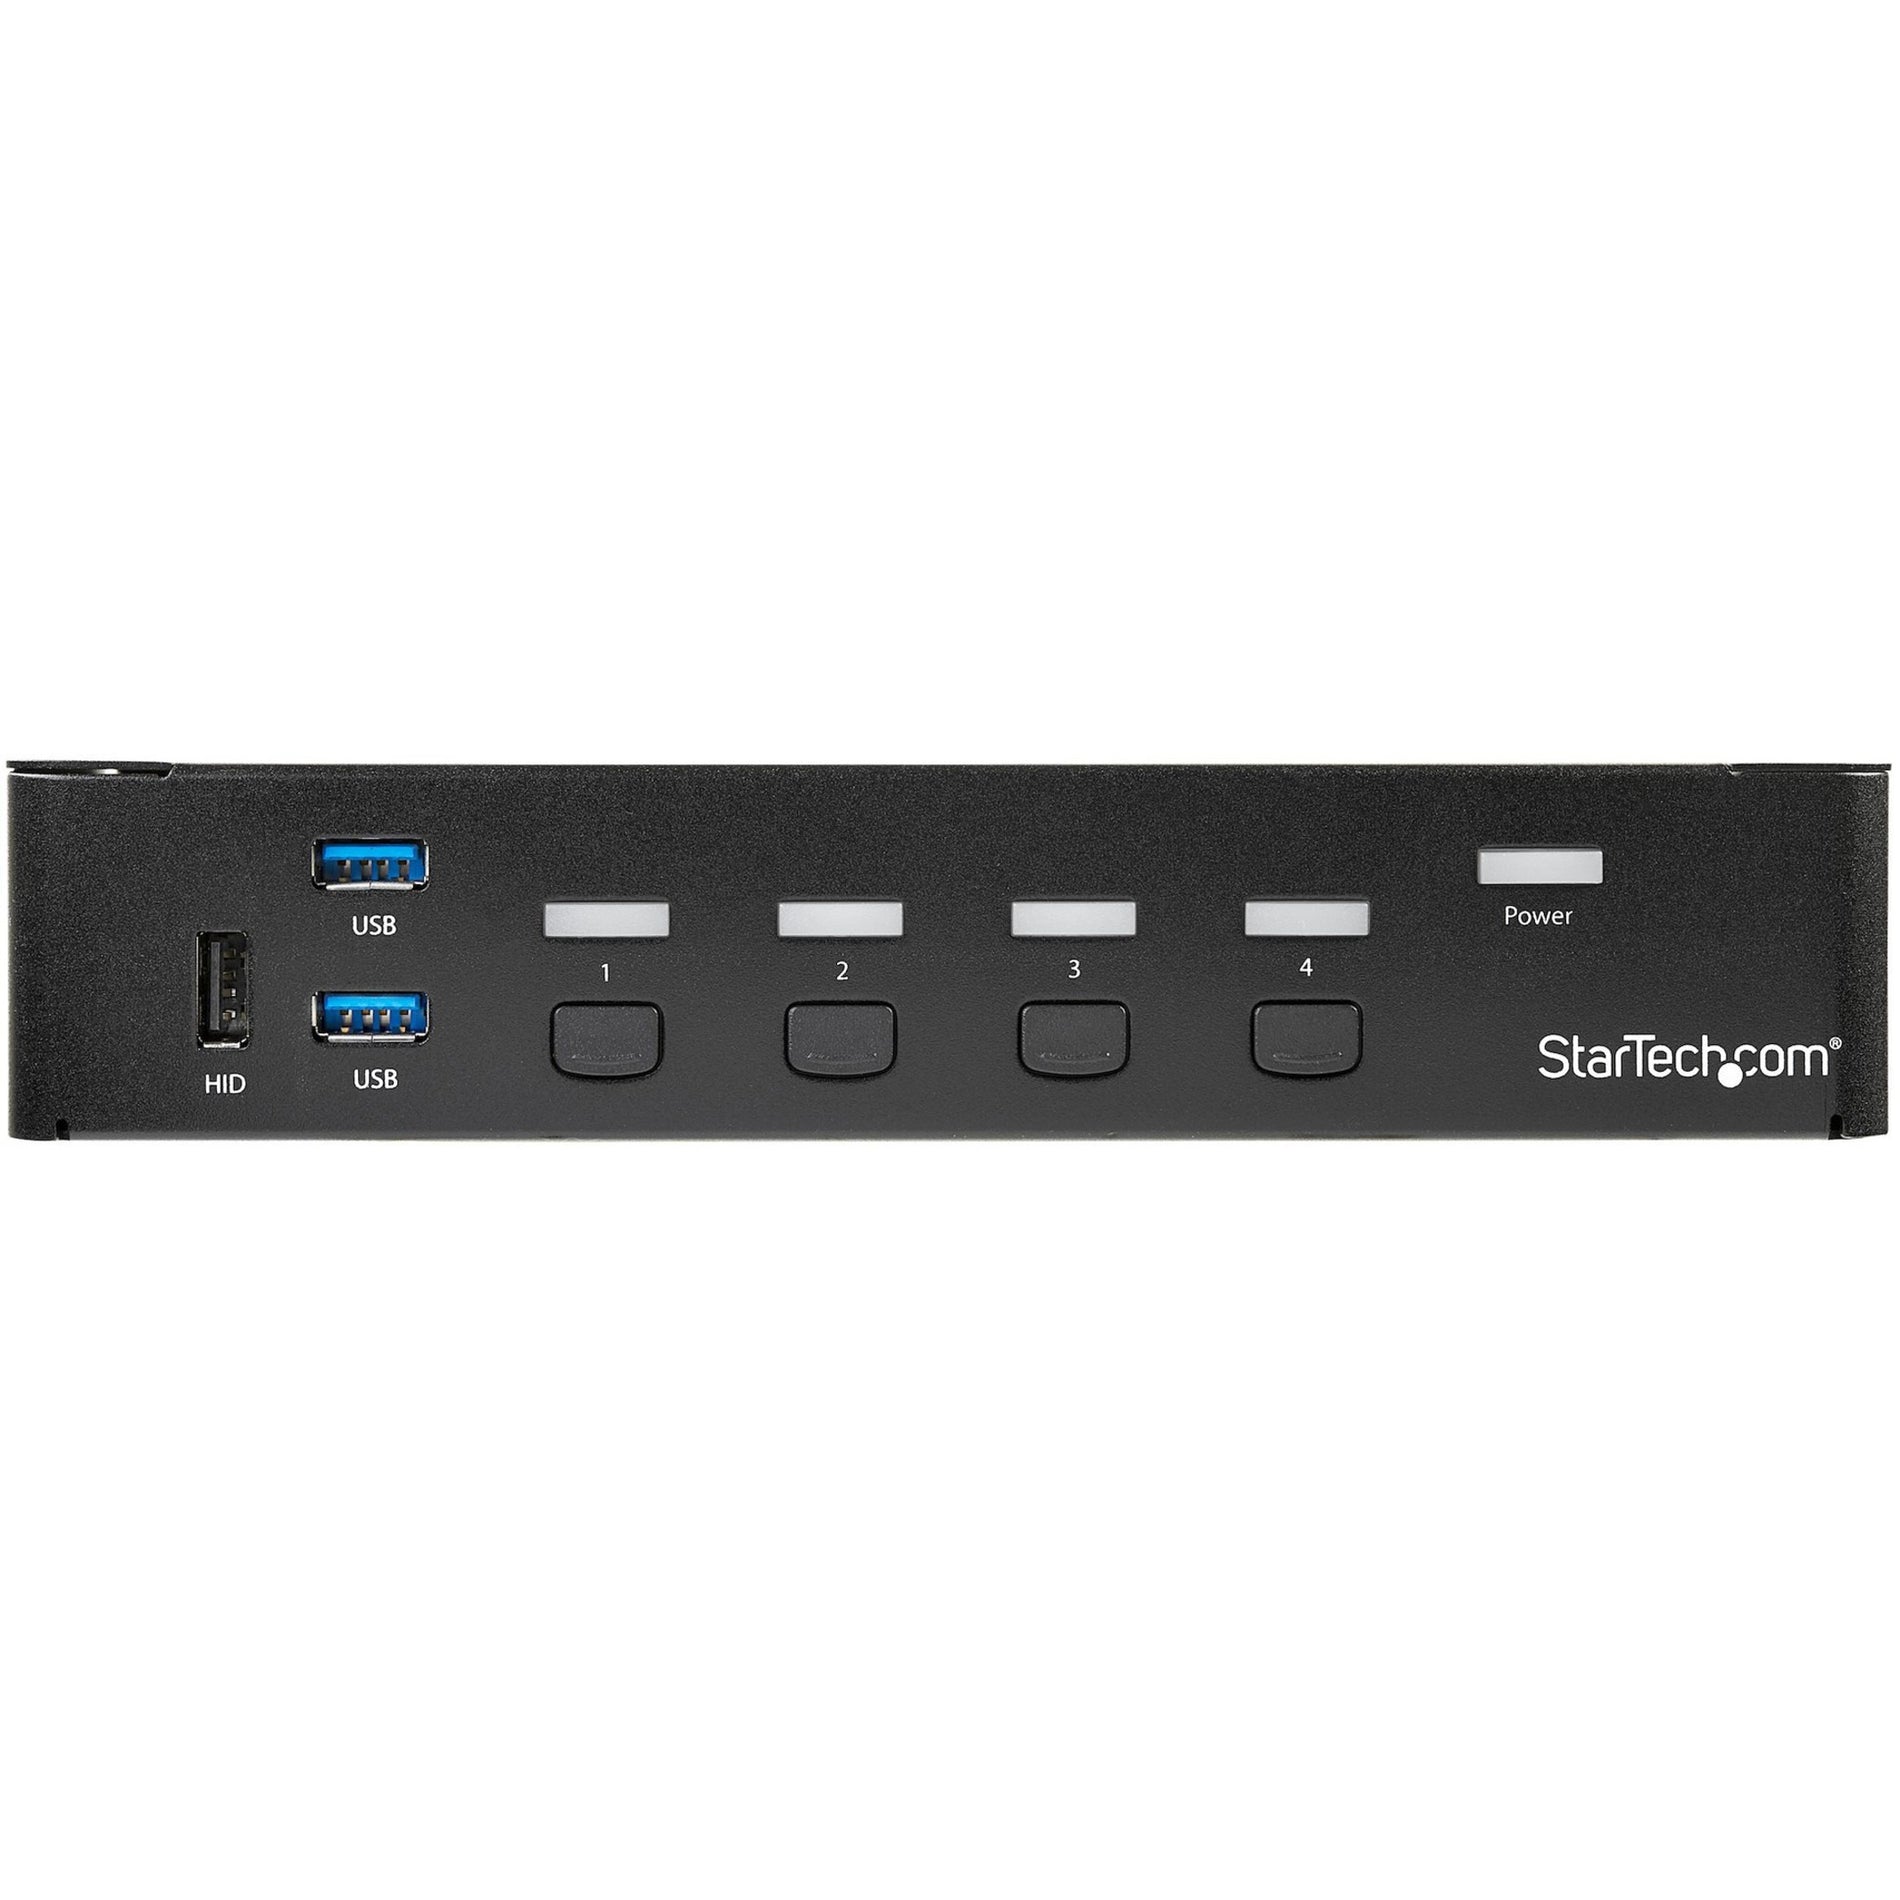 StarTech.com SV431DPU3A2 4-口DisplayPort KVM开关 - USB 3.0 - 4K，内置USB 3.0外设集线器 品牌名称：StarTech.com  品牌翻译：星通科技